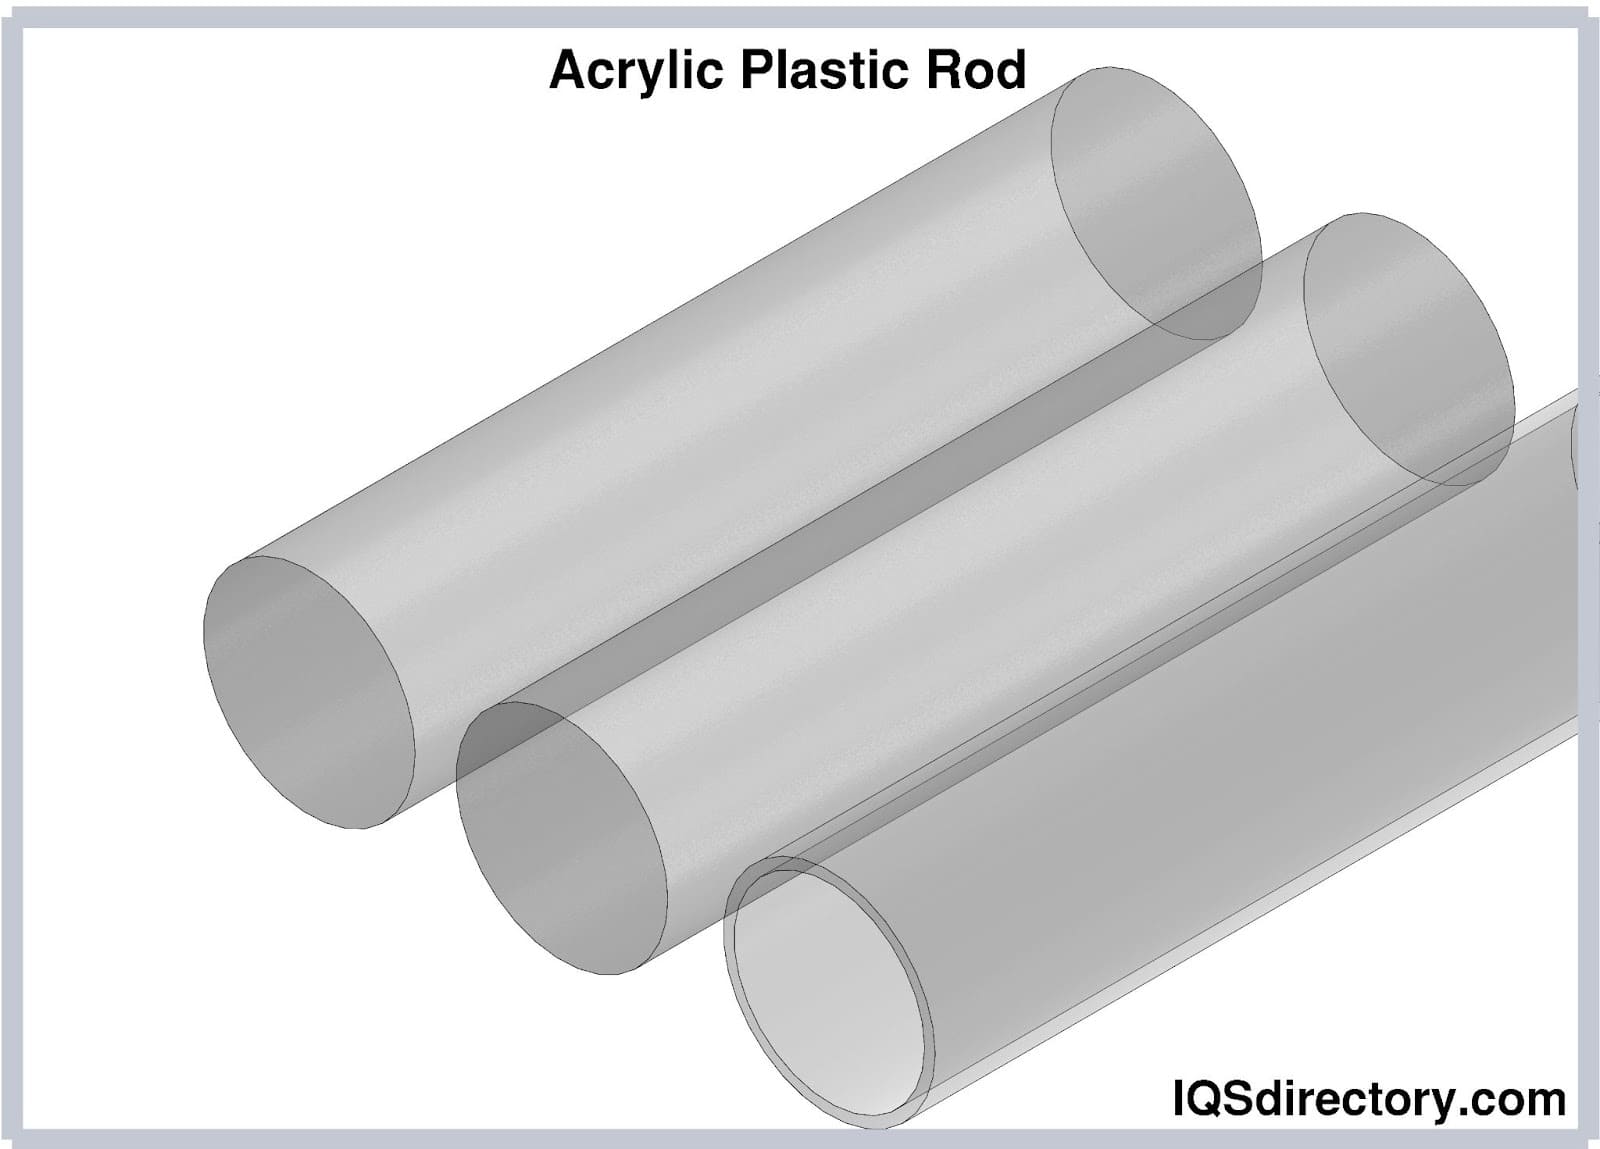 Acrylic Plastic Rod